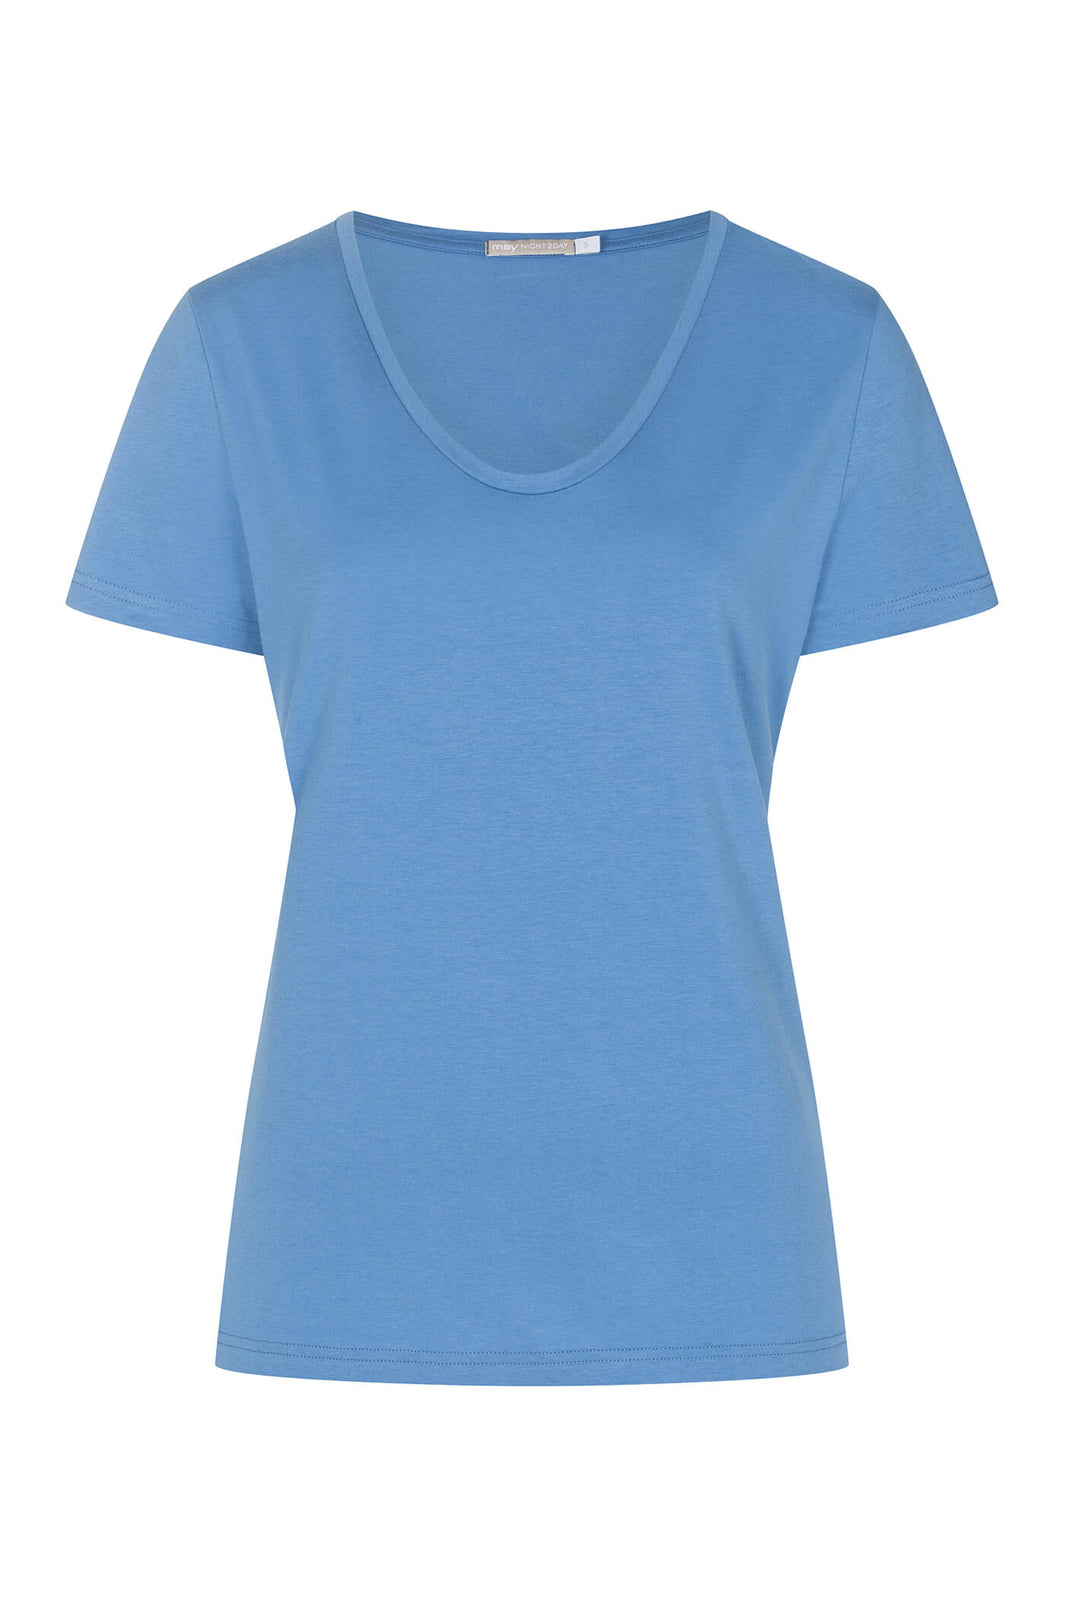 Mey 16387 Zia Pacific Blue Short Sleeve Top - Shirley Allum Boutique